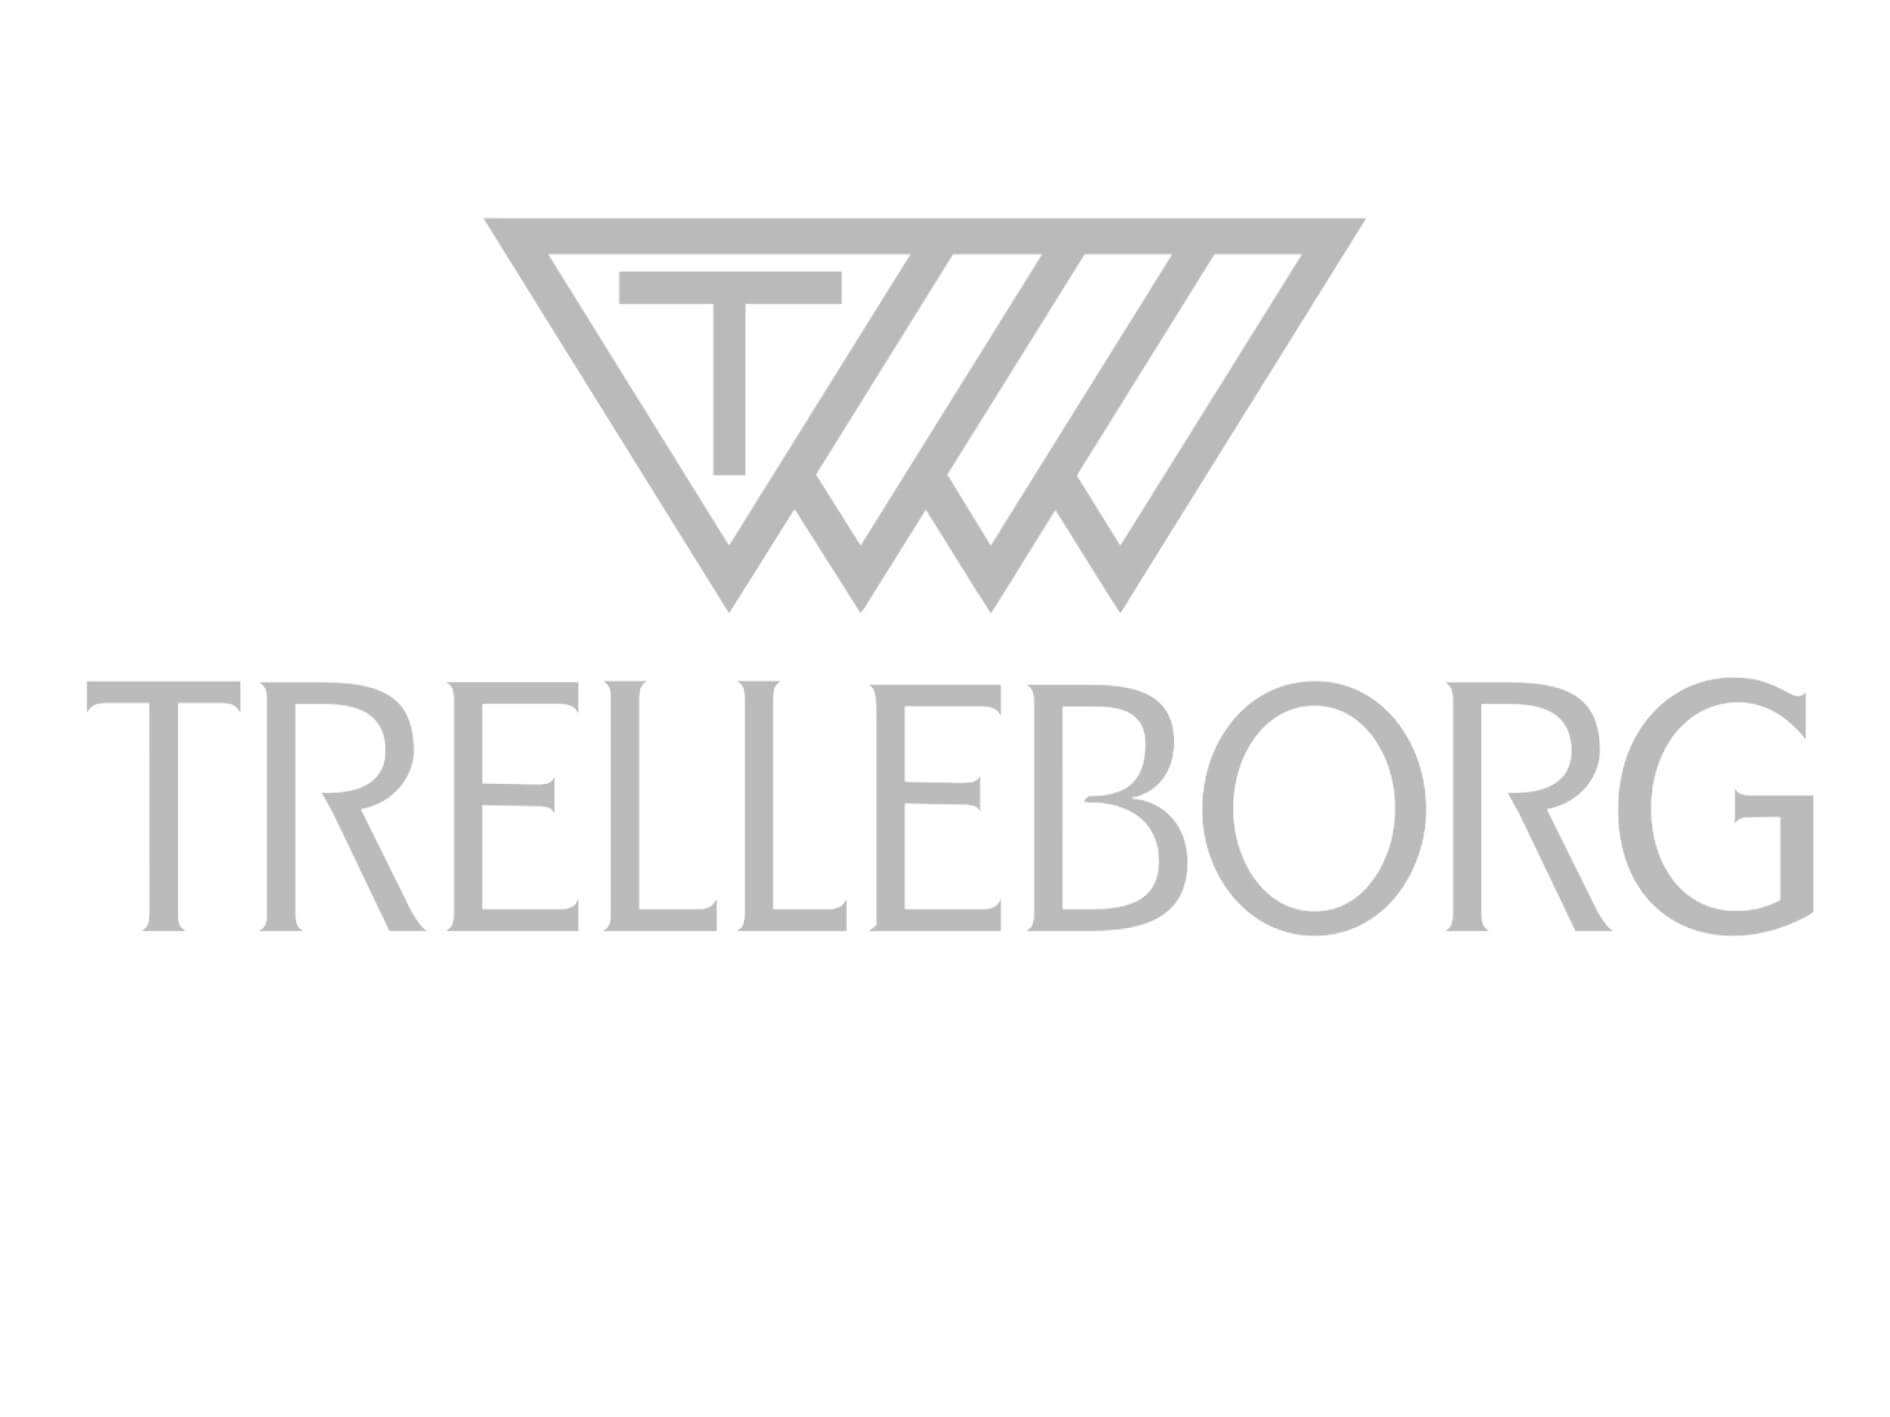 tellaborg Sealing Solutions